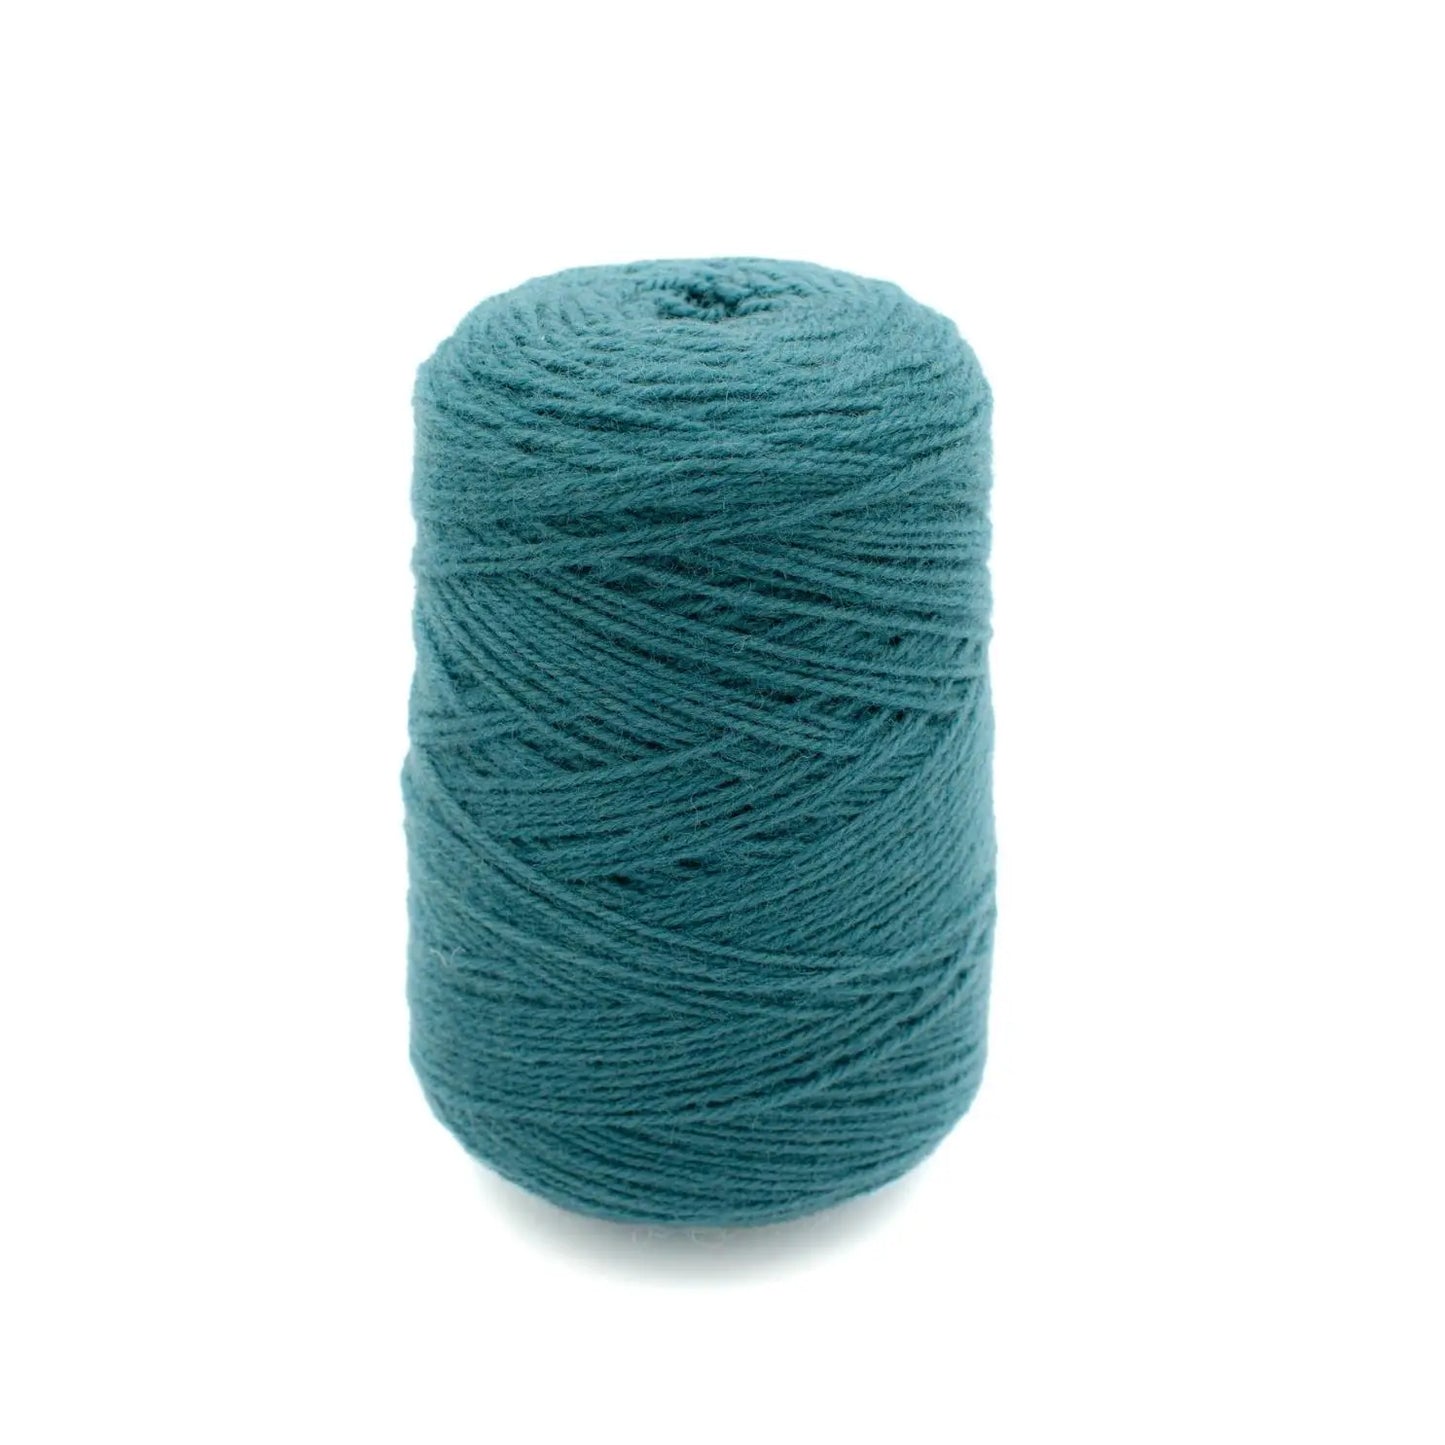 Turquoise Blue Wool Yarn